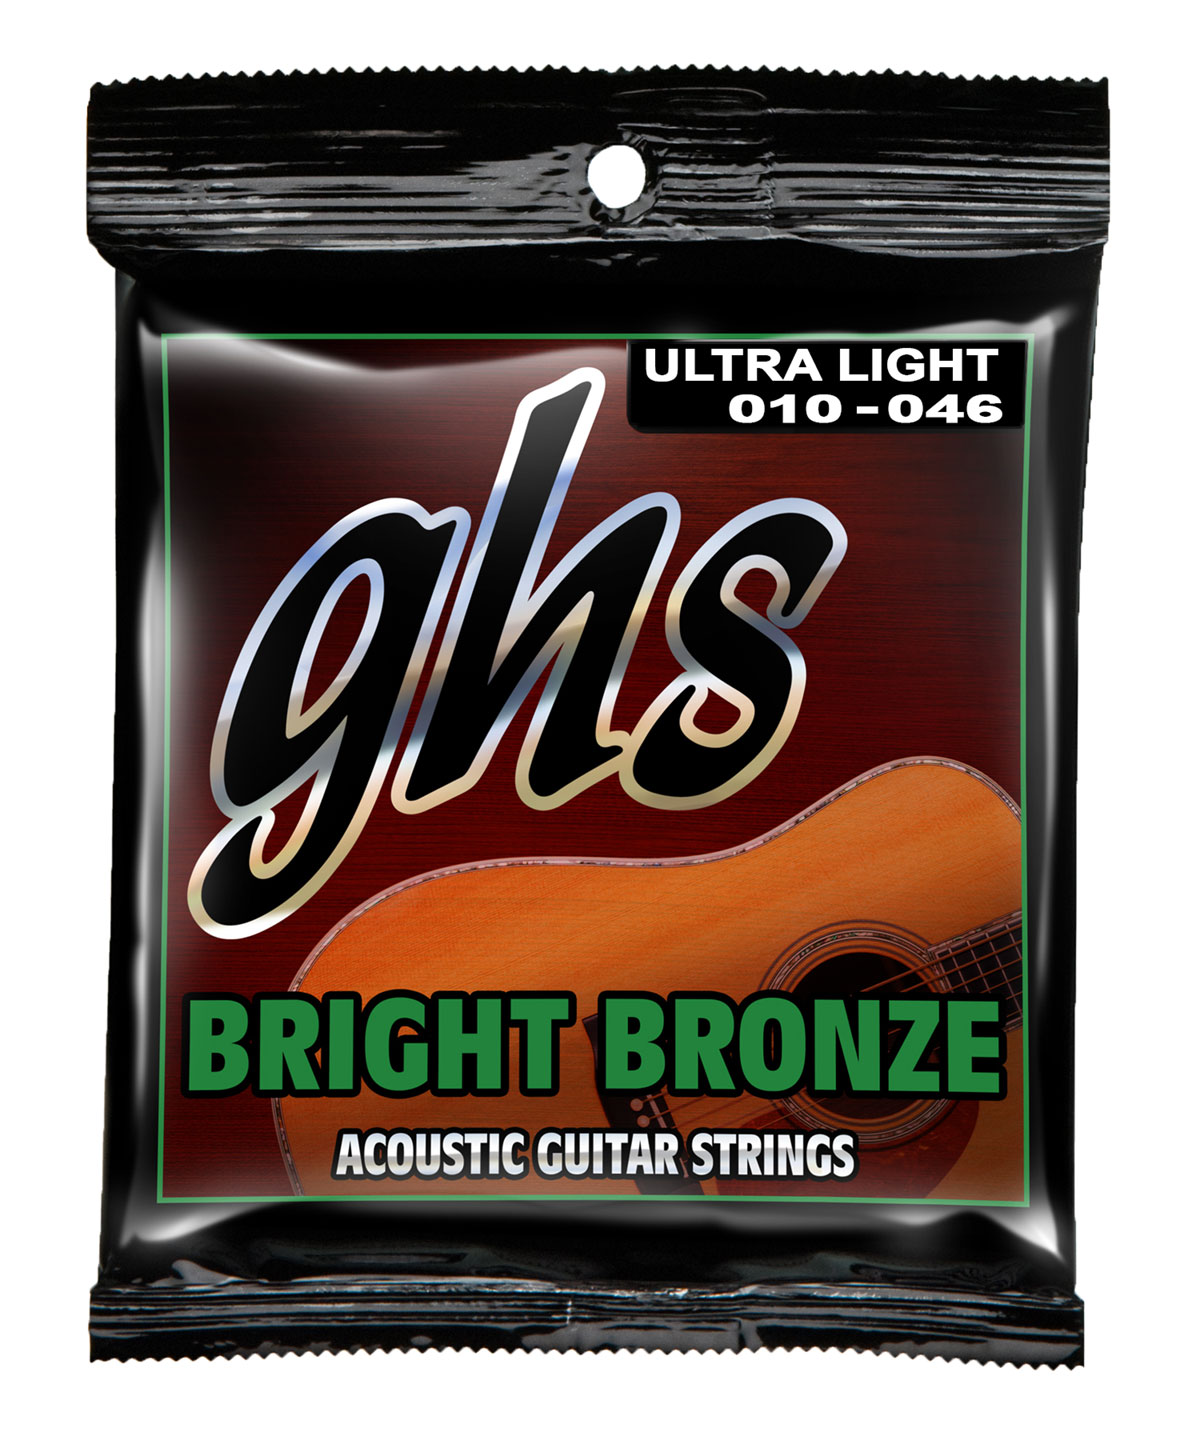 GHS Bright Bronze - BB10U - Acoustic Guitar String Set, 80/20 Bronze, Ultra Light, 010-046